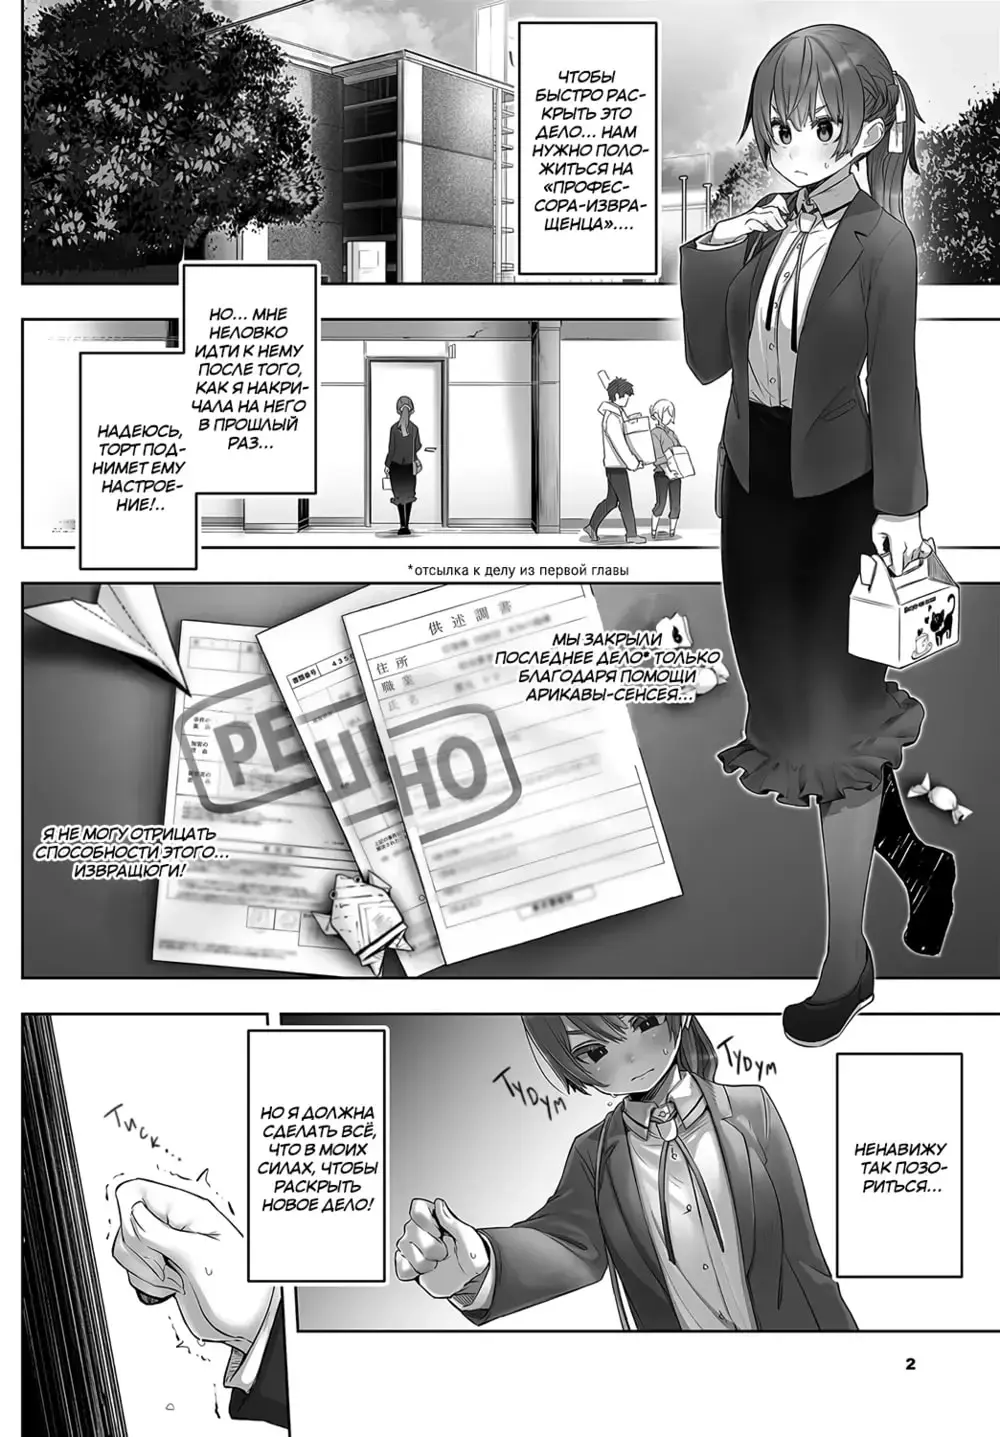 [Shimohara] Tokyo Black Box -Do-S Kyoujyu no Nanjiken Report- case. 2 | Токийский чёрный ящик ~Отчёт профессора-садиста~ 2 Fhentai.net - Page 3